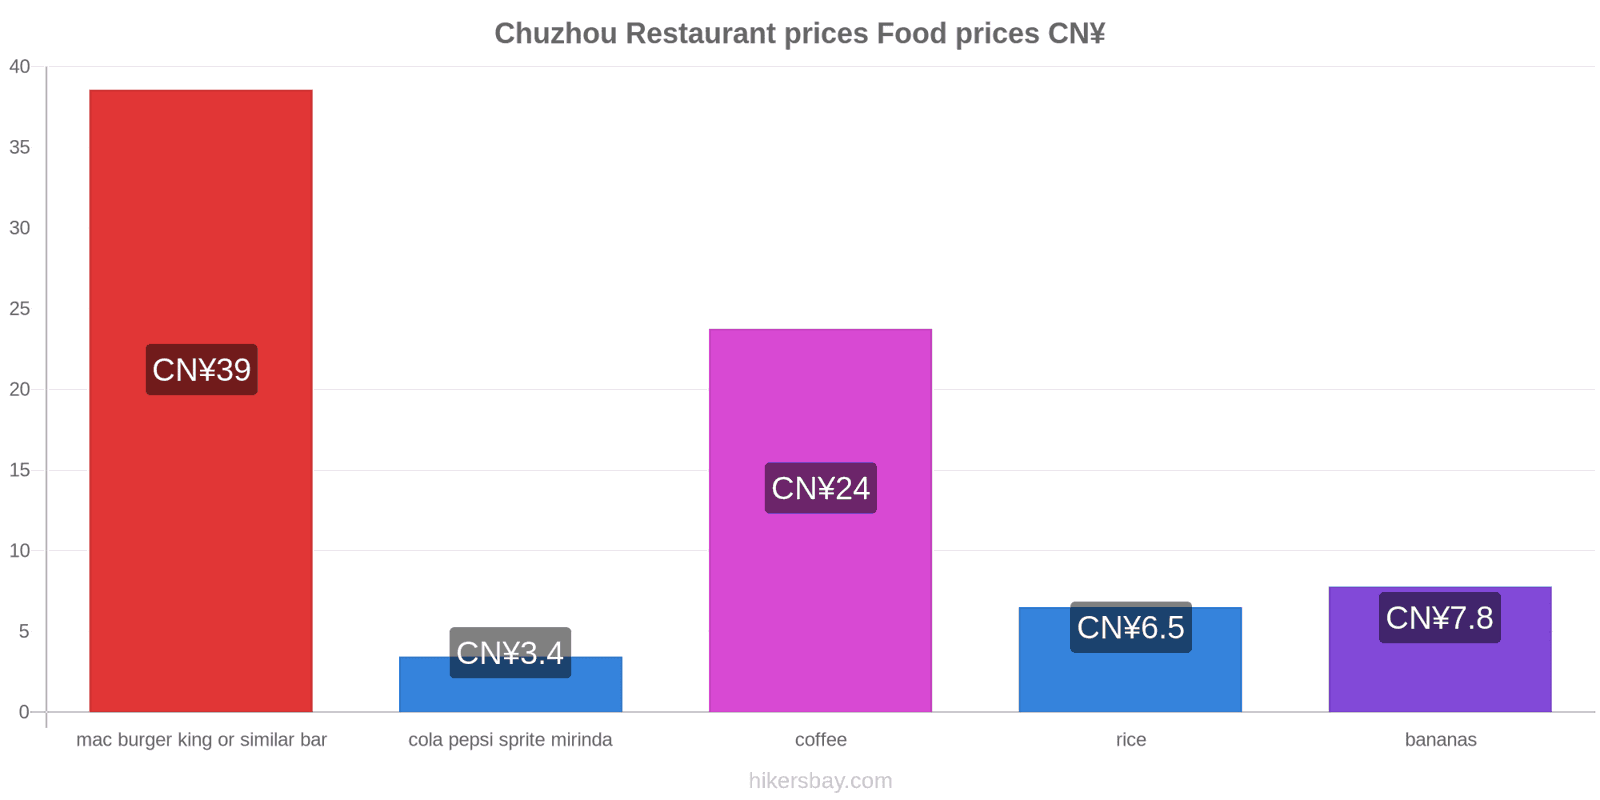 Chuzhou price changes hikersbay.com